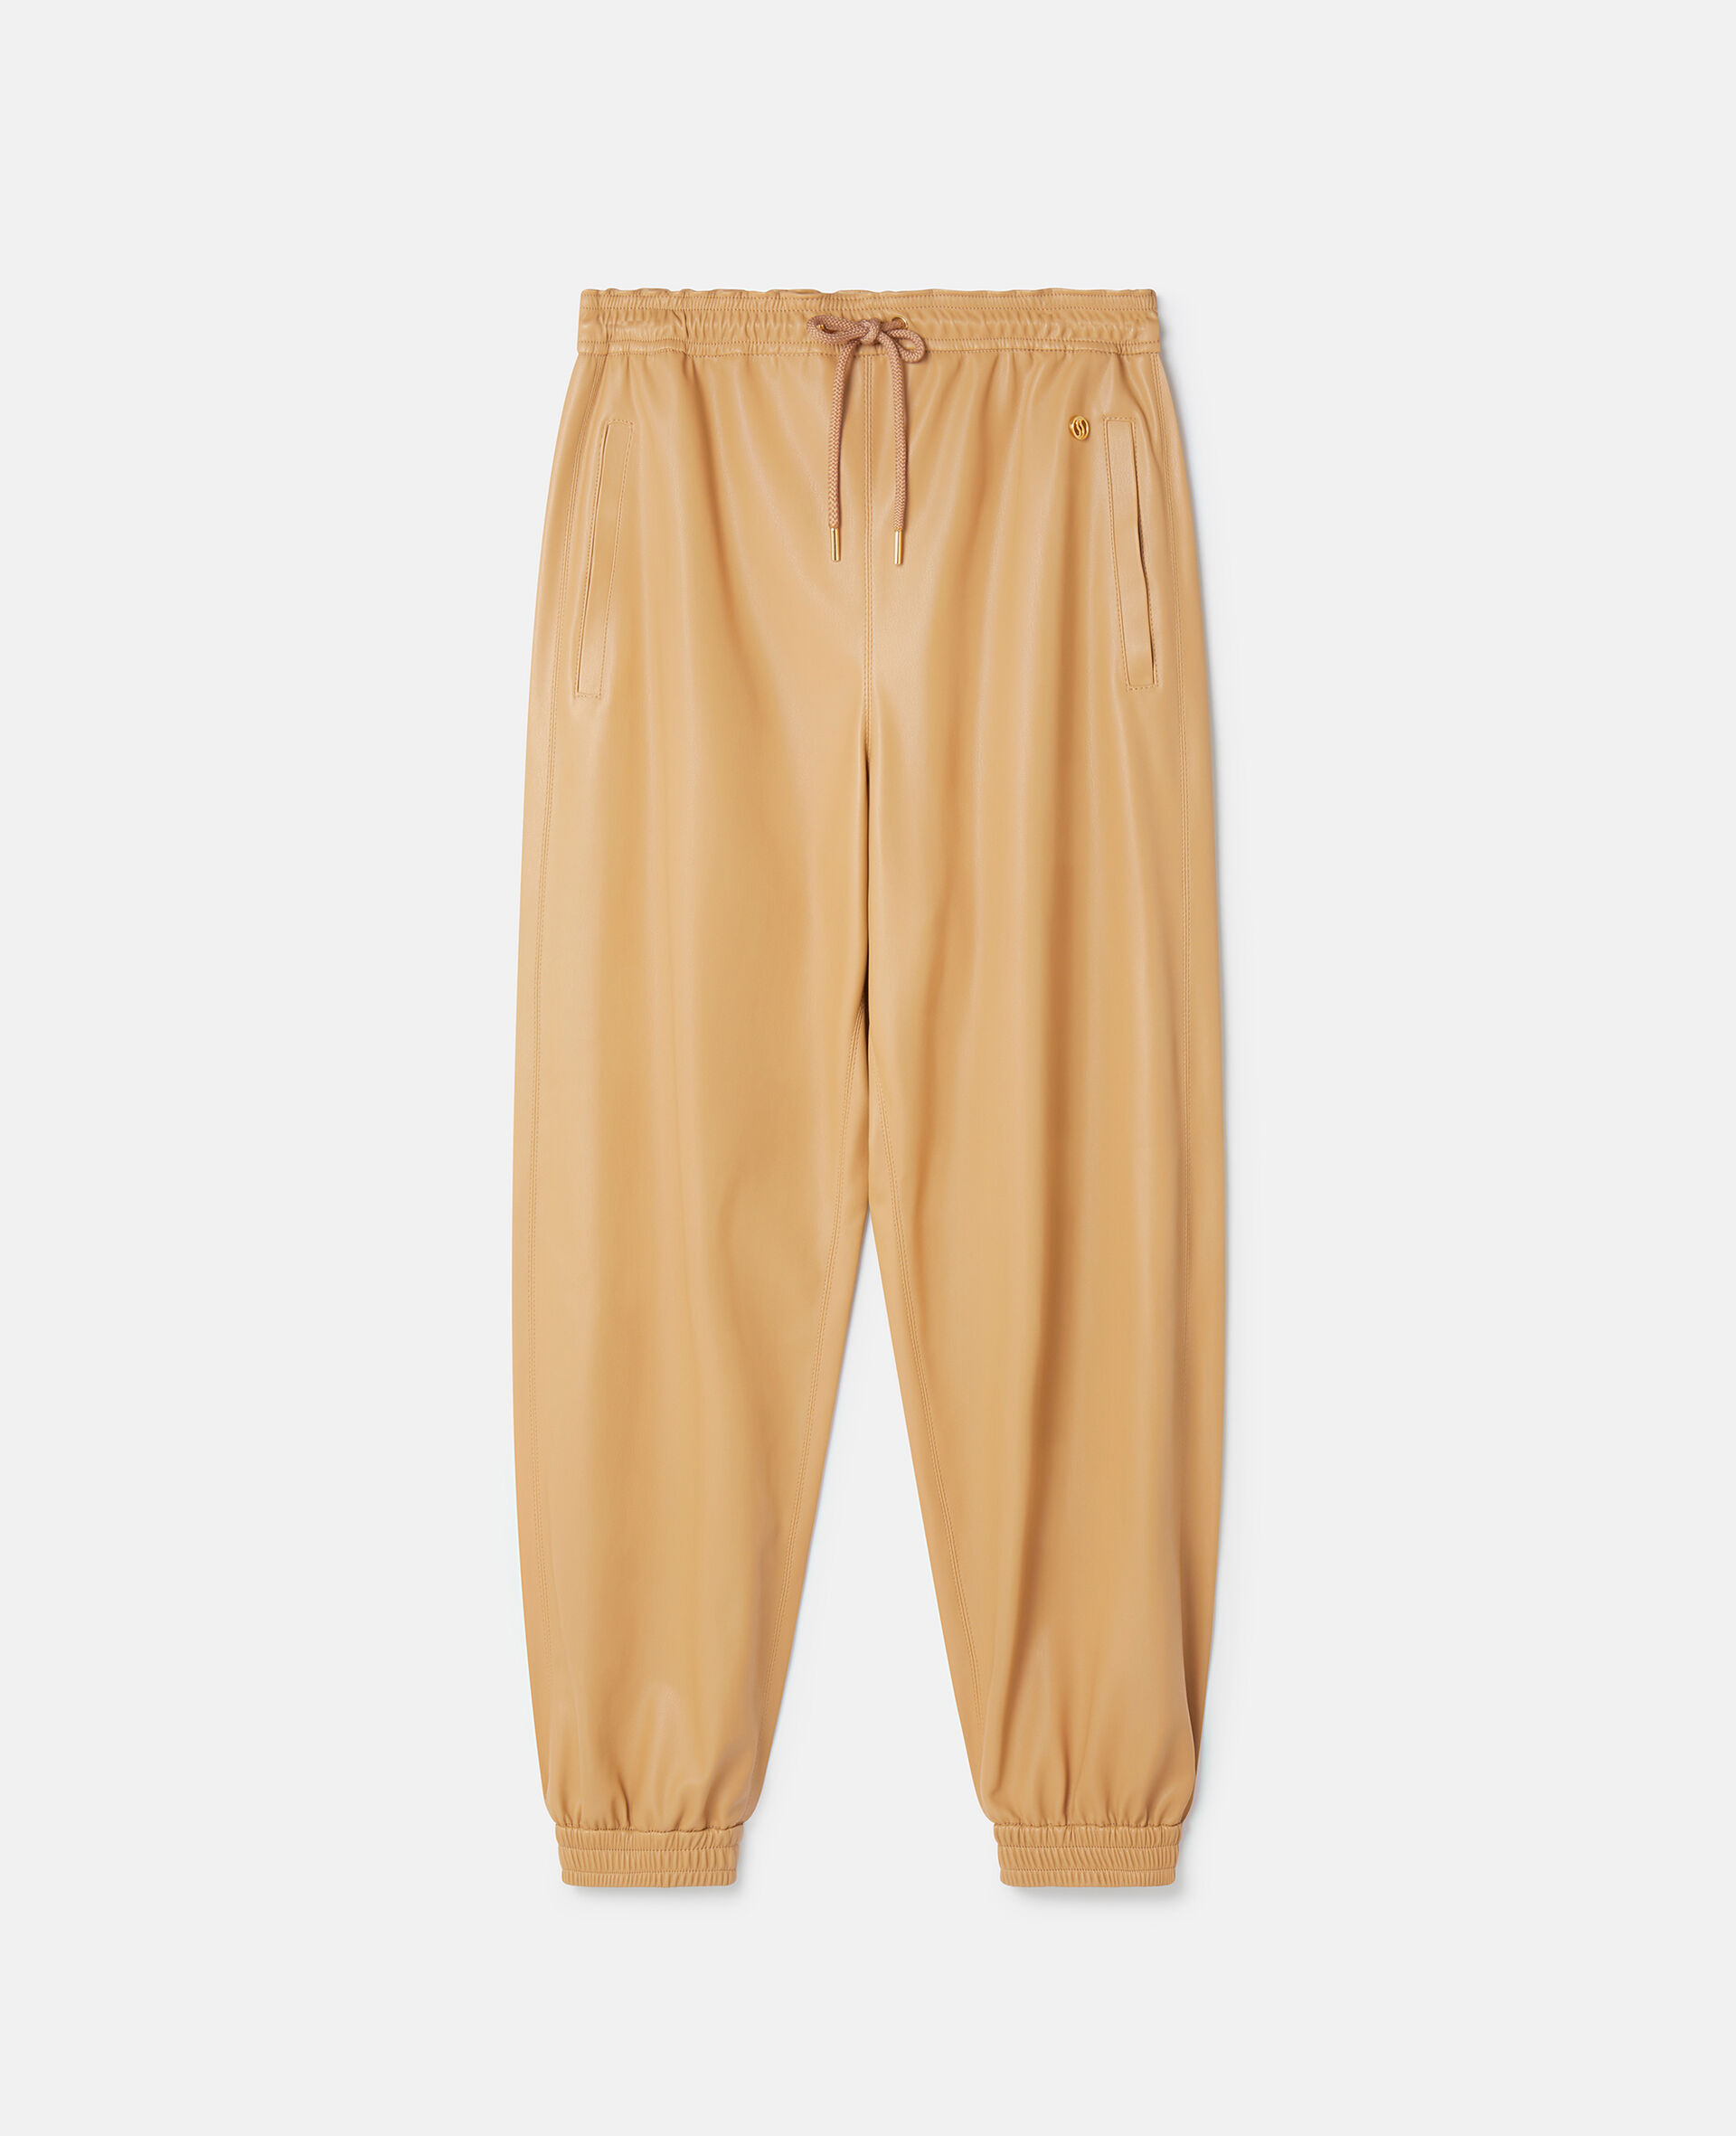 Alter Mat Cuffed Trousers-Brown-medium